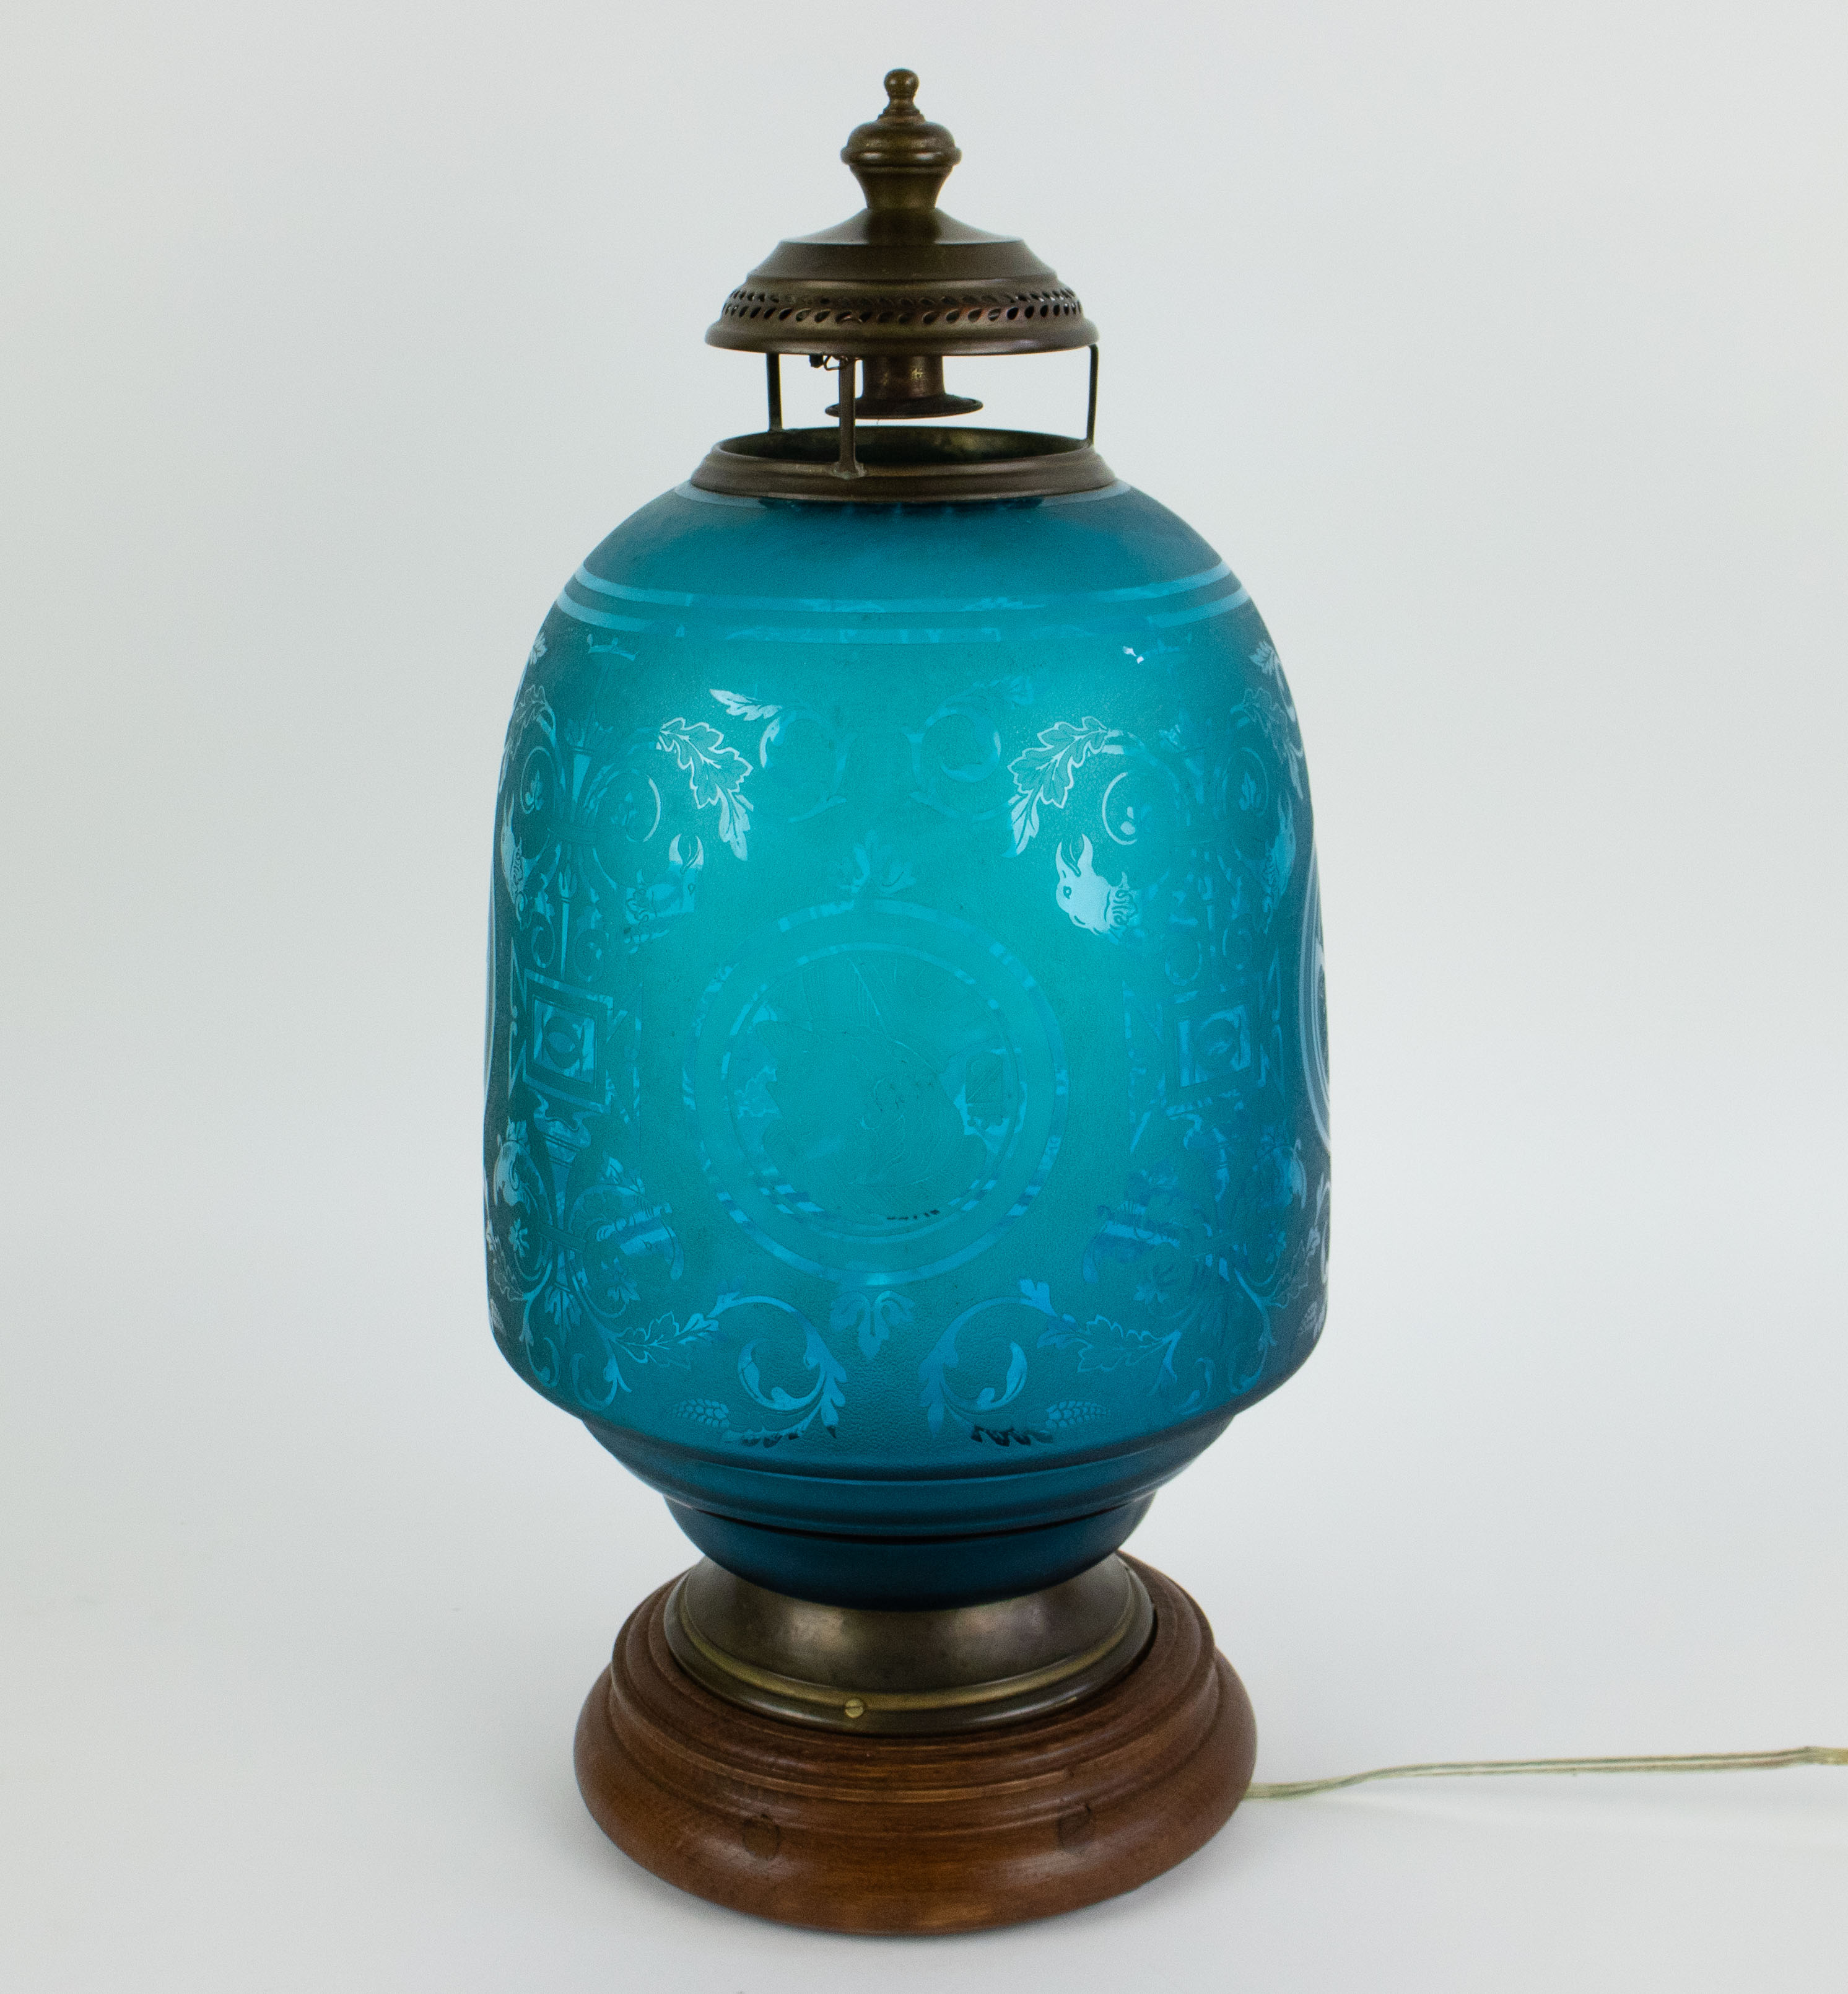 Engraved blue glass lantern Baccarat - Image 2 of 3